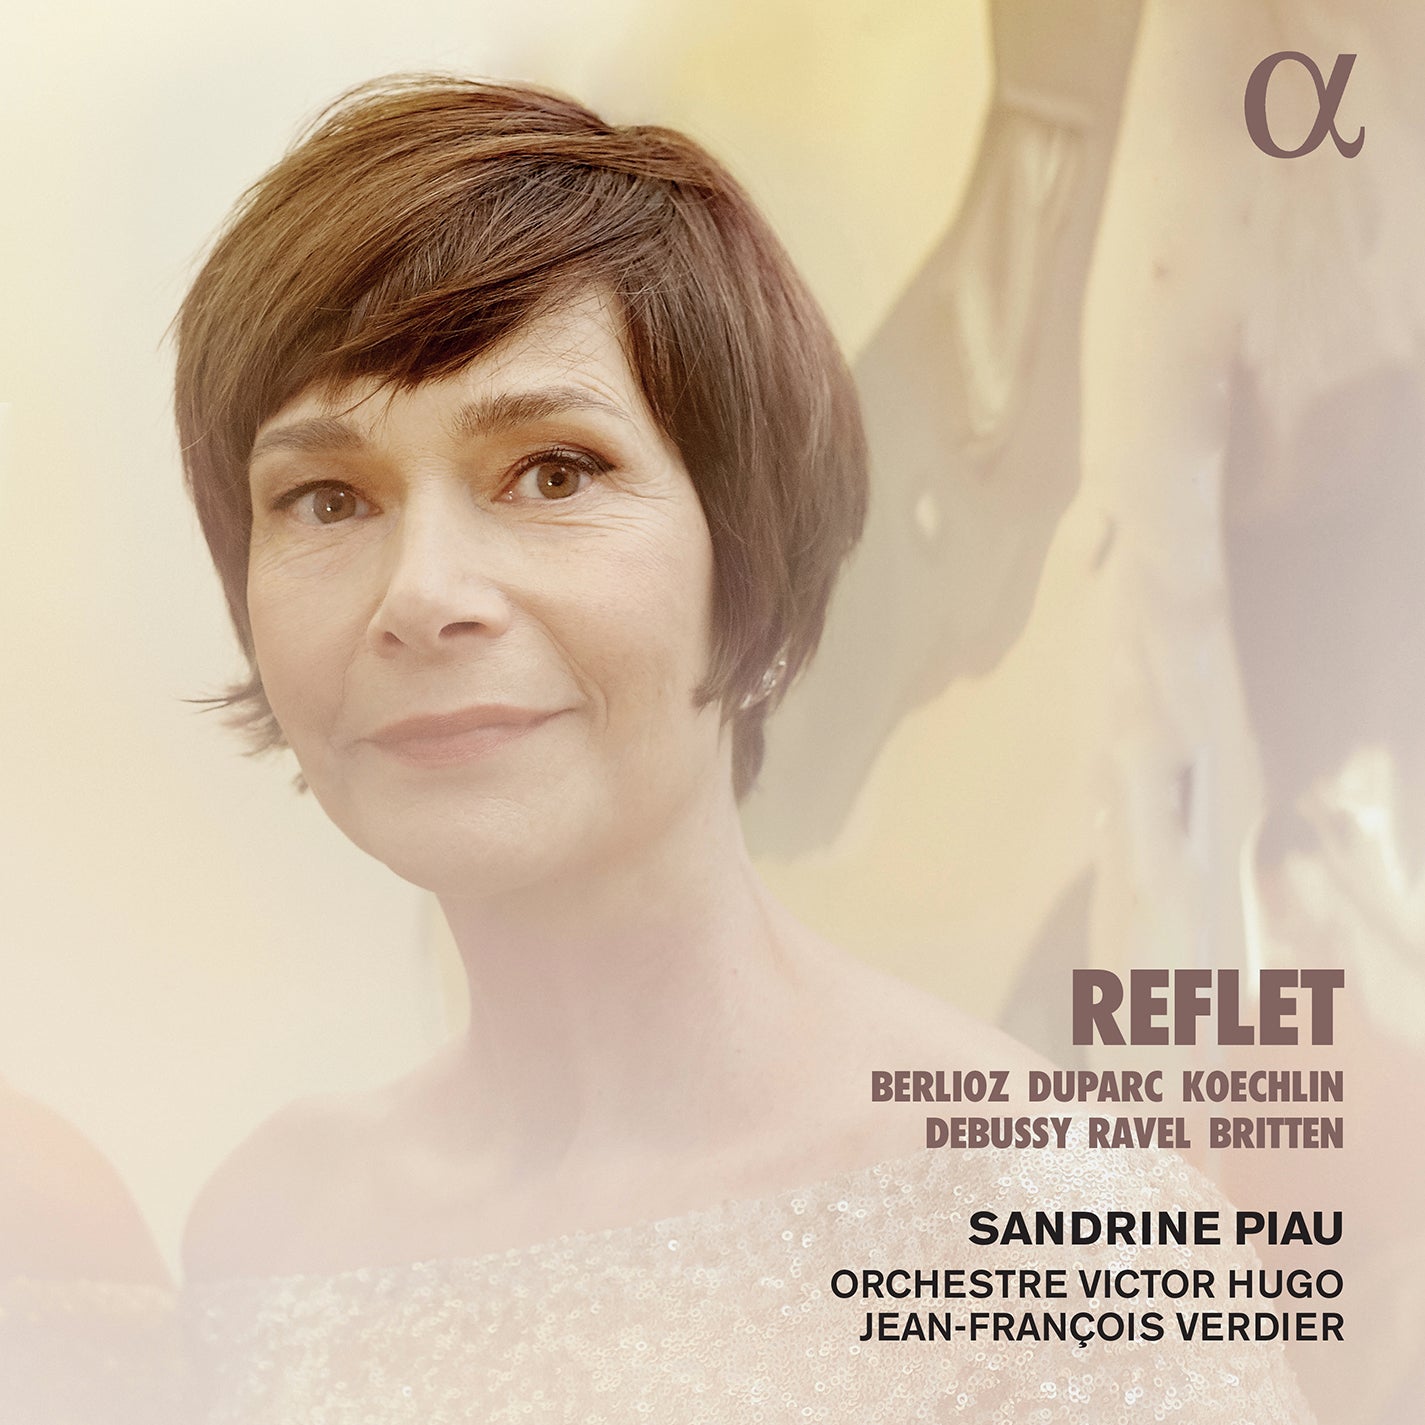 Reflet / Piau, Verdier, Orchestre Victor Hugo